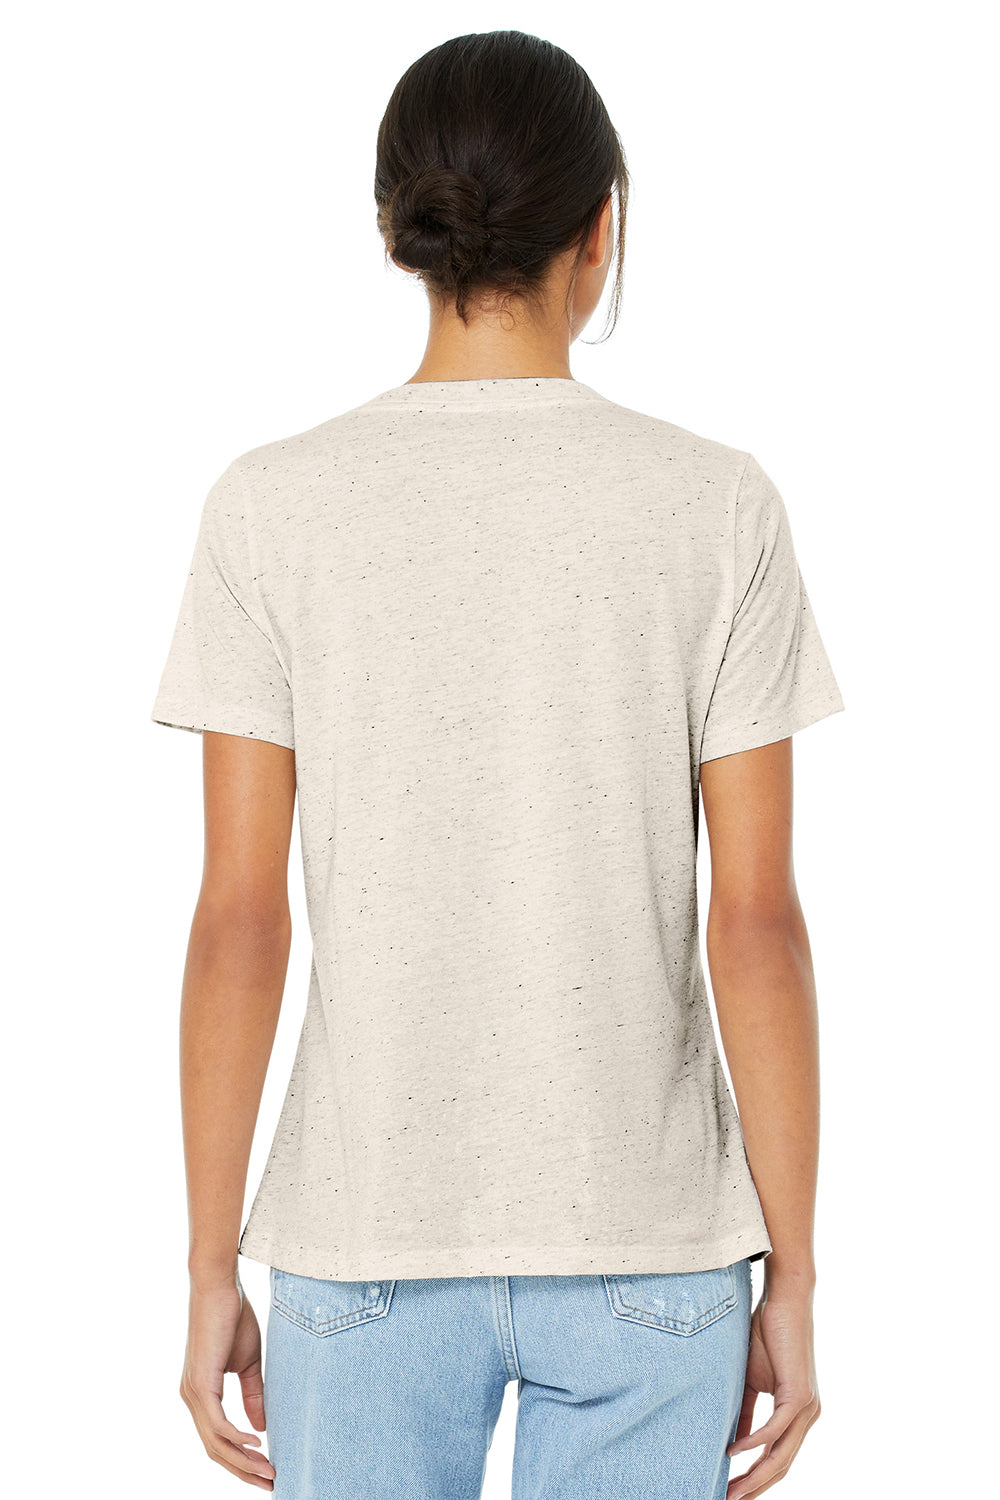 Bella + Canvas BC6415 Womens Short Sleeve V-Neck T-Shirt Oatmeal Model Back